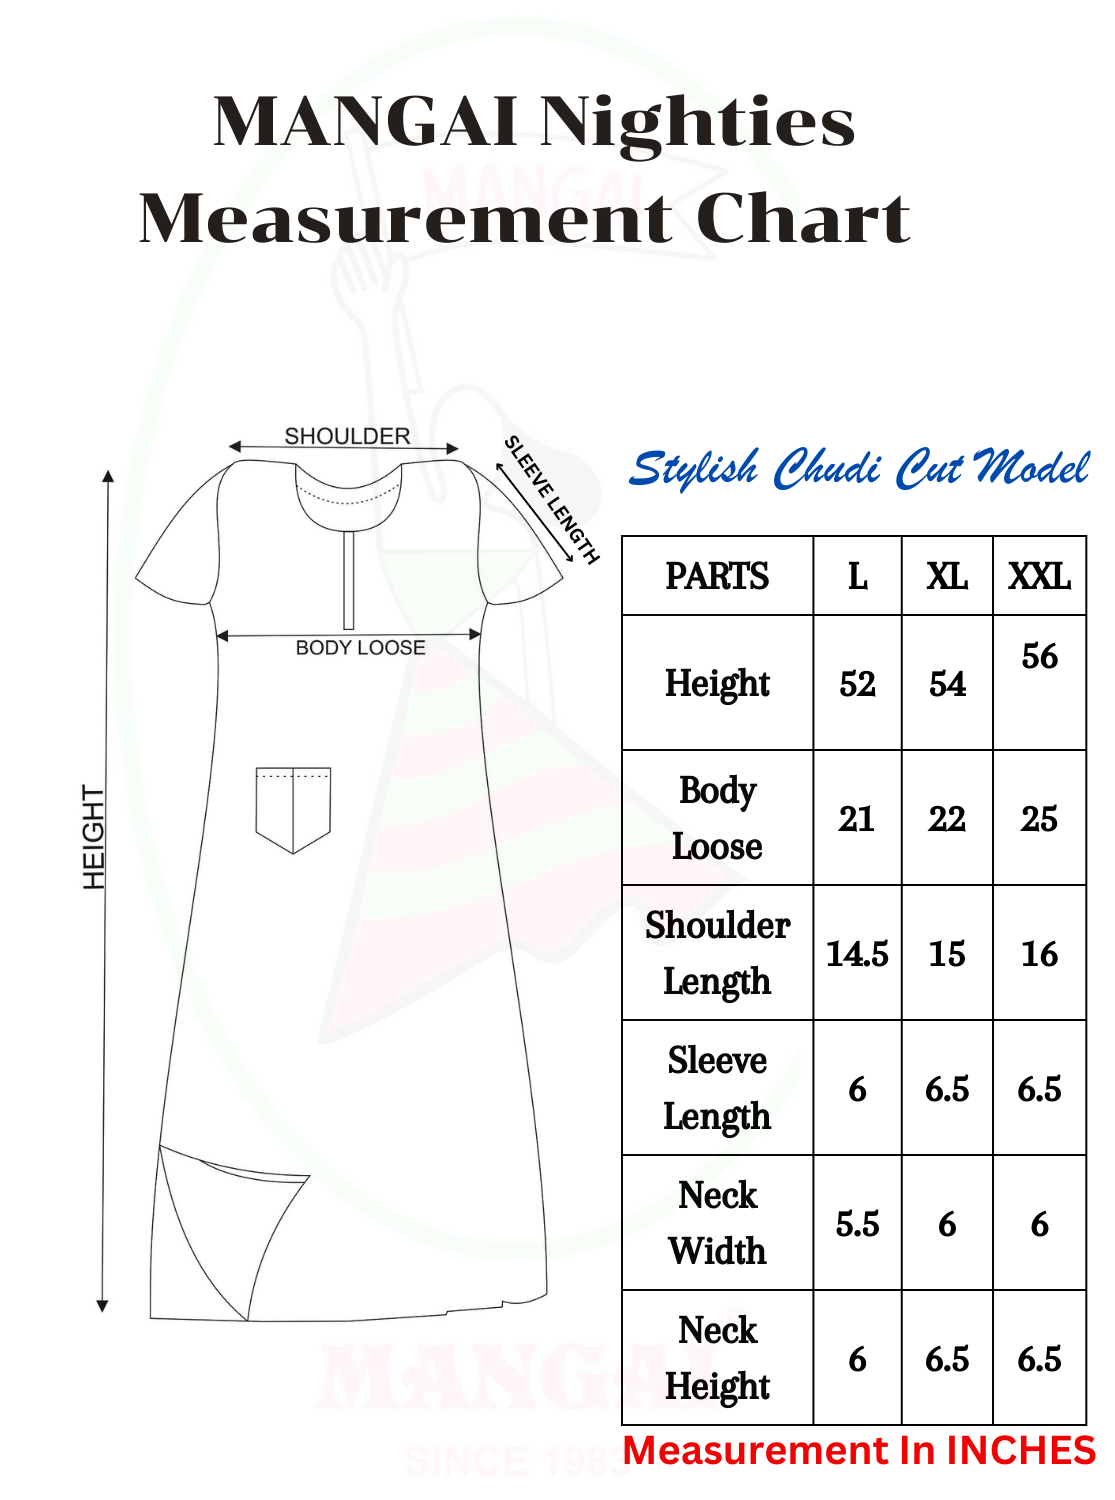 MANGAI Premium Cotton CHUDI CUT Model Nighties - Fancy Neck | With Side Pocket |Shrinkage Free Nighties | Stylish Collection's for Trendy Women's